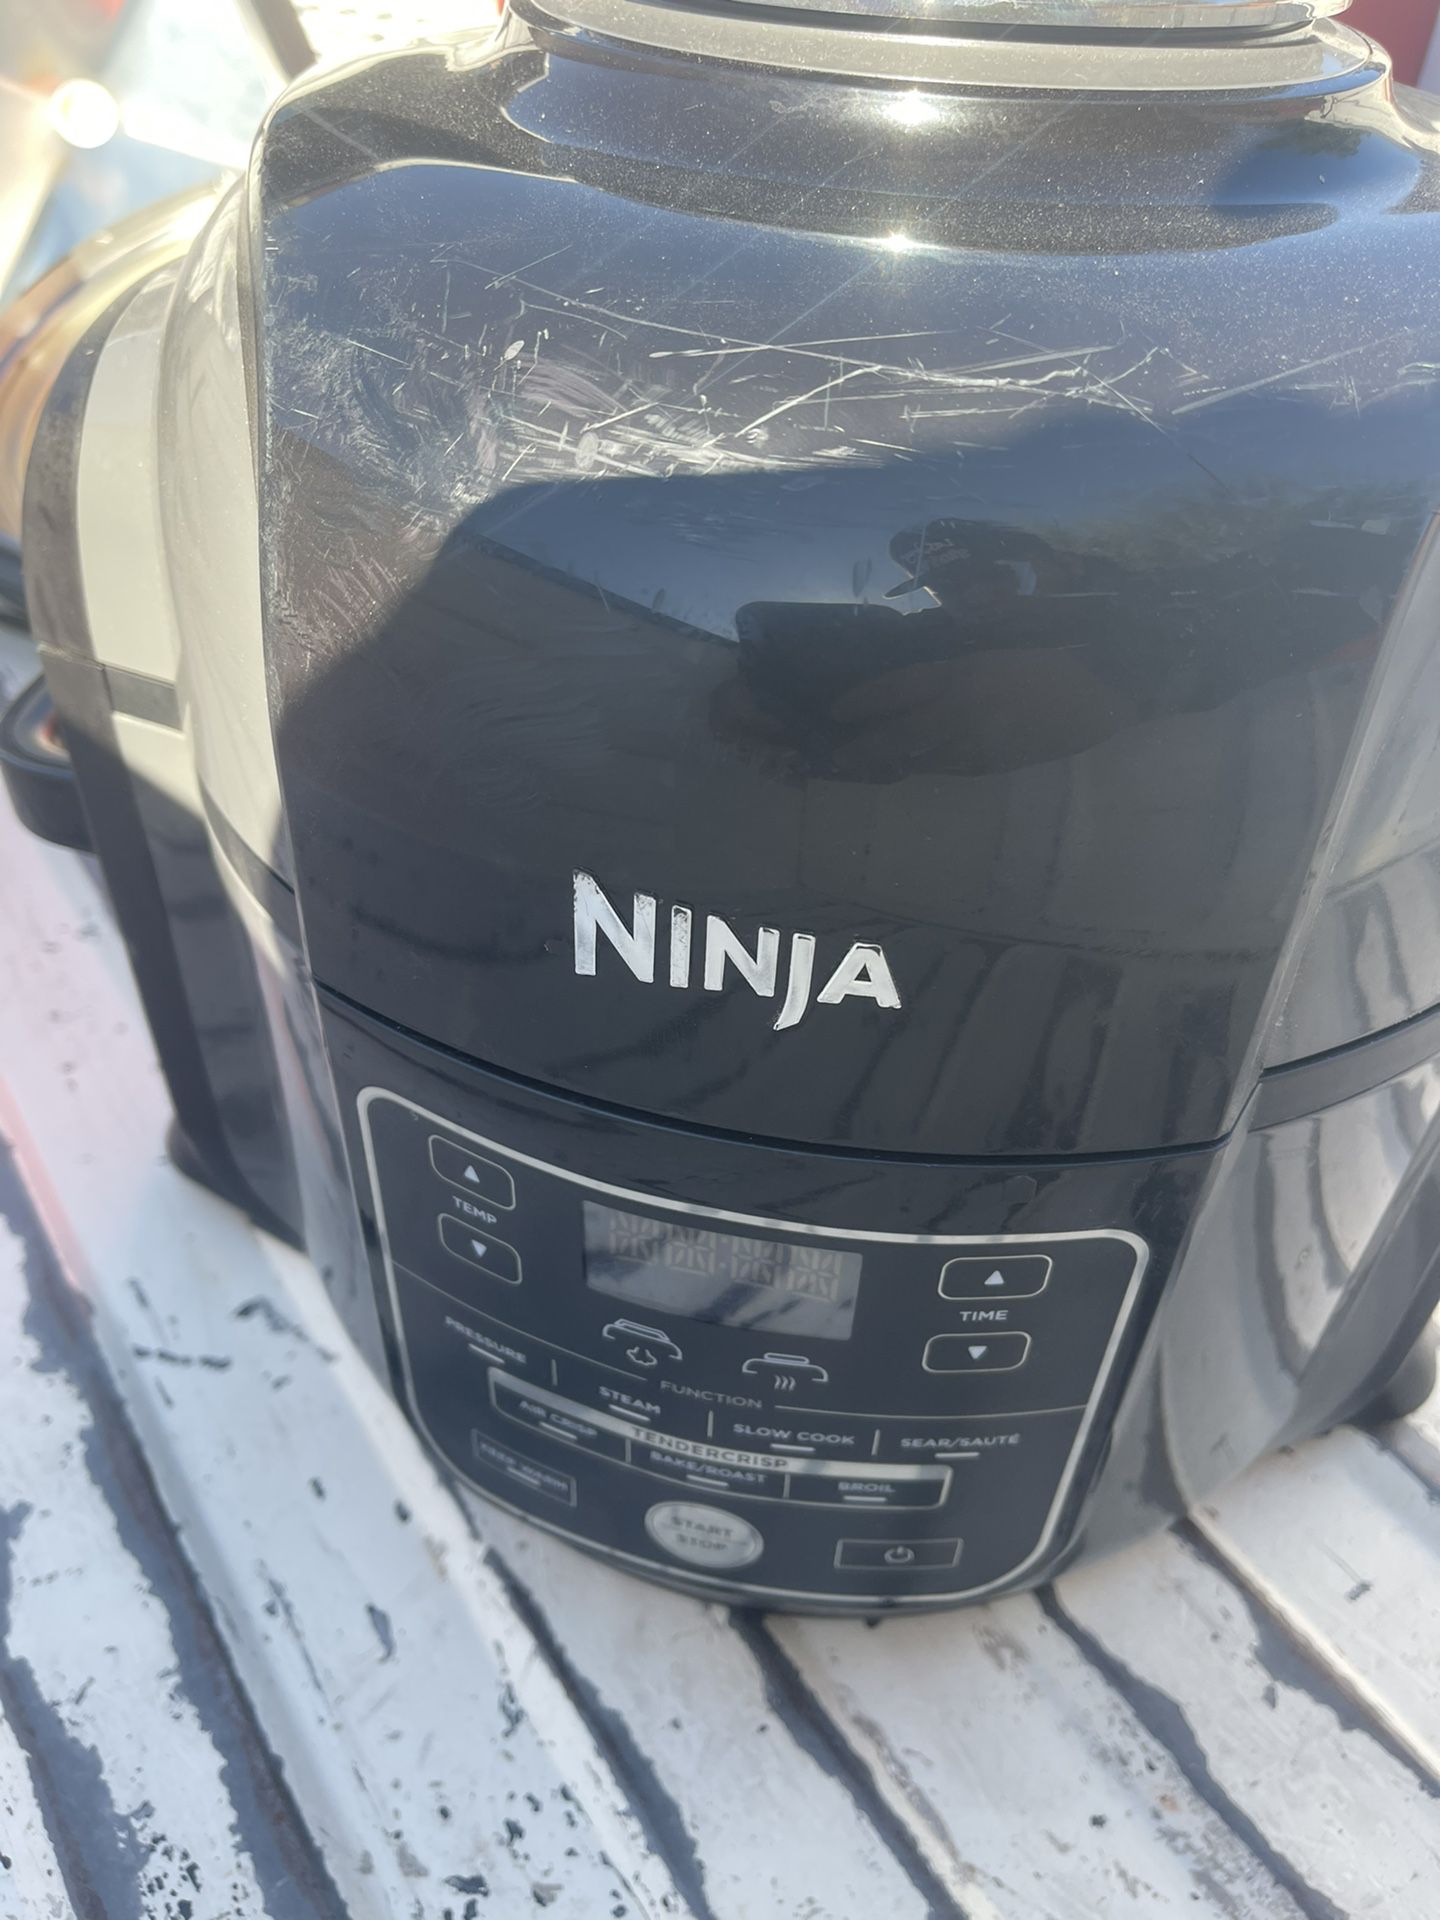 Ninja Crockpot And air Fryer